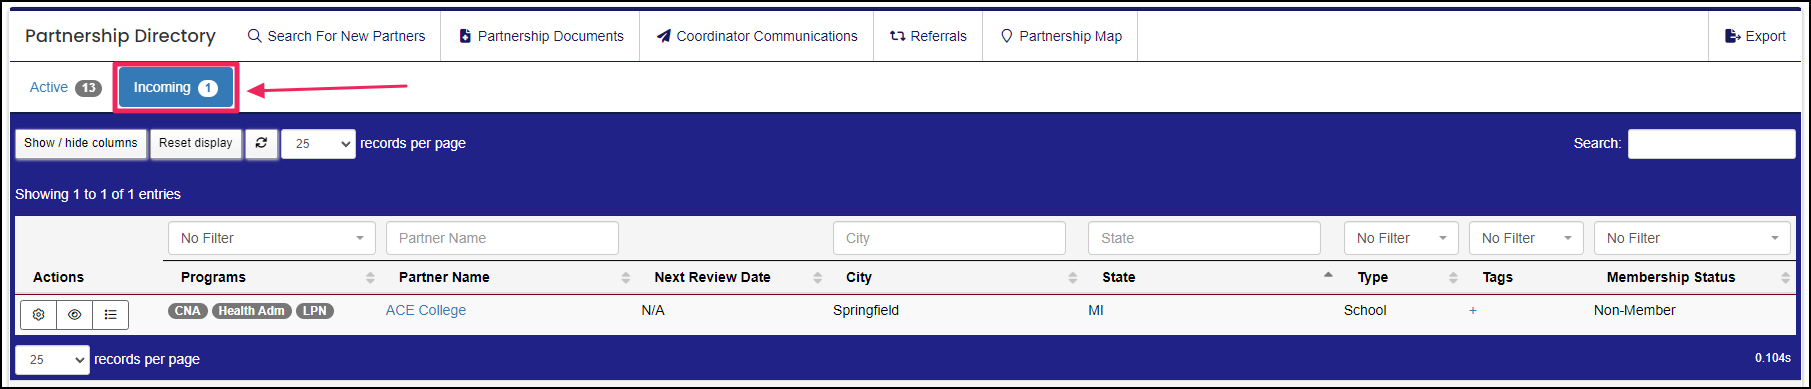 Image shows incoming tab of partnership directory.